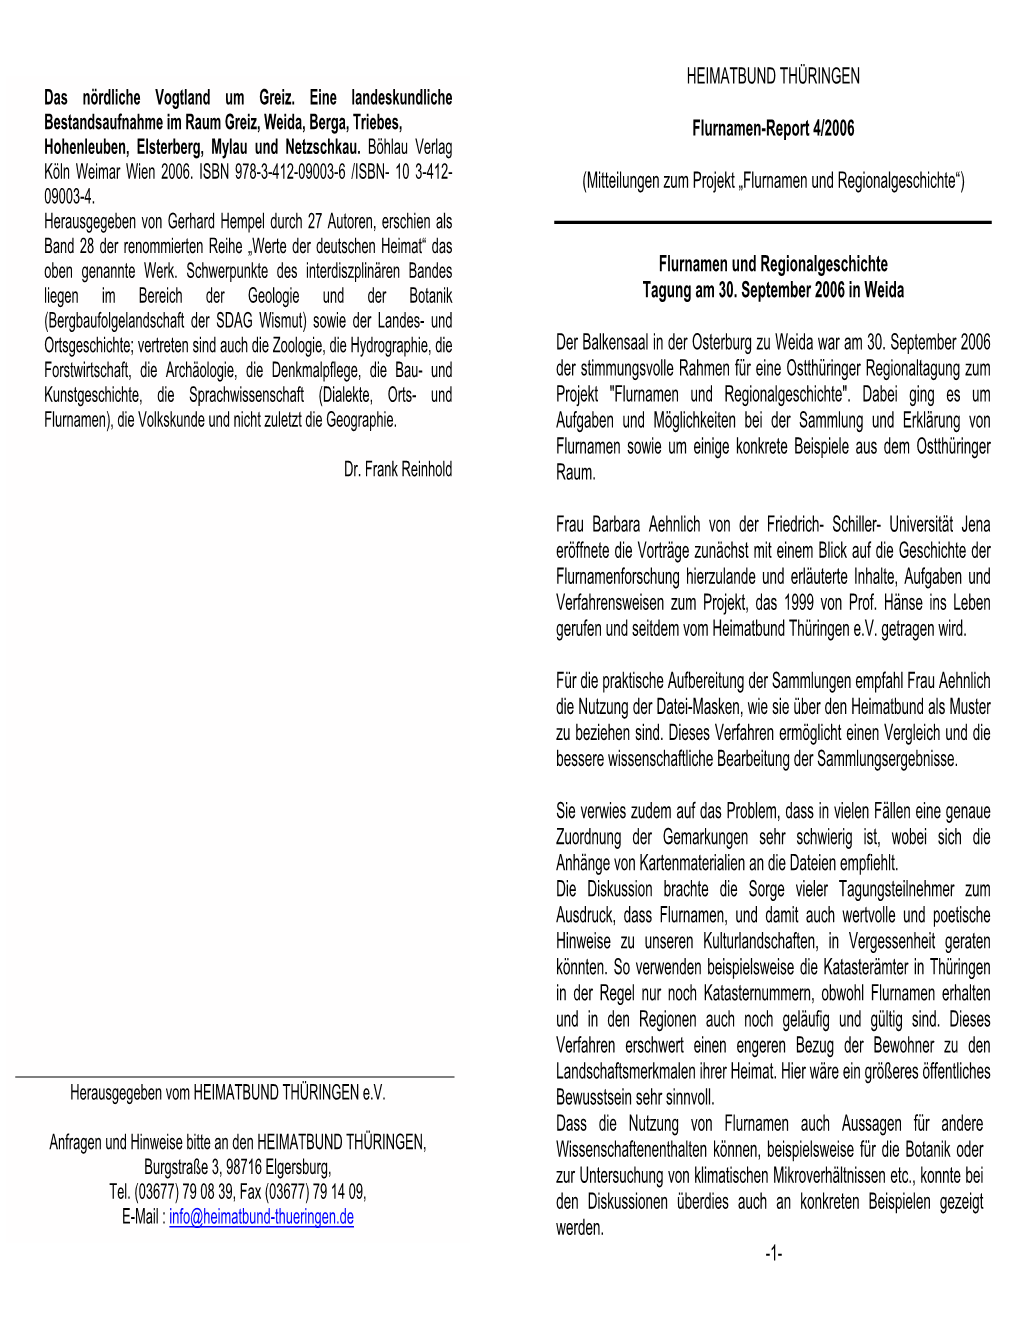 HEIMATBUND THÜRINGEN Flurnamen-Report 4/2006